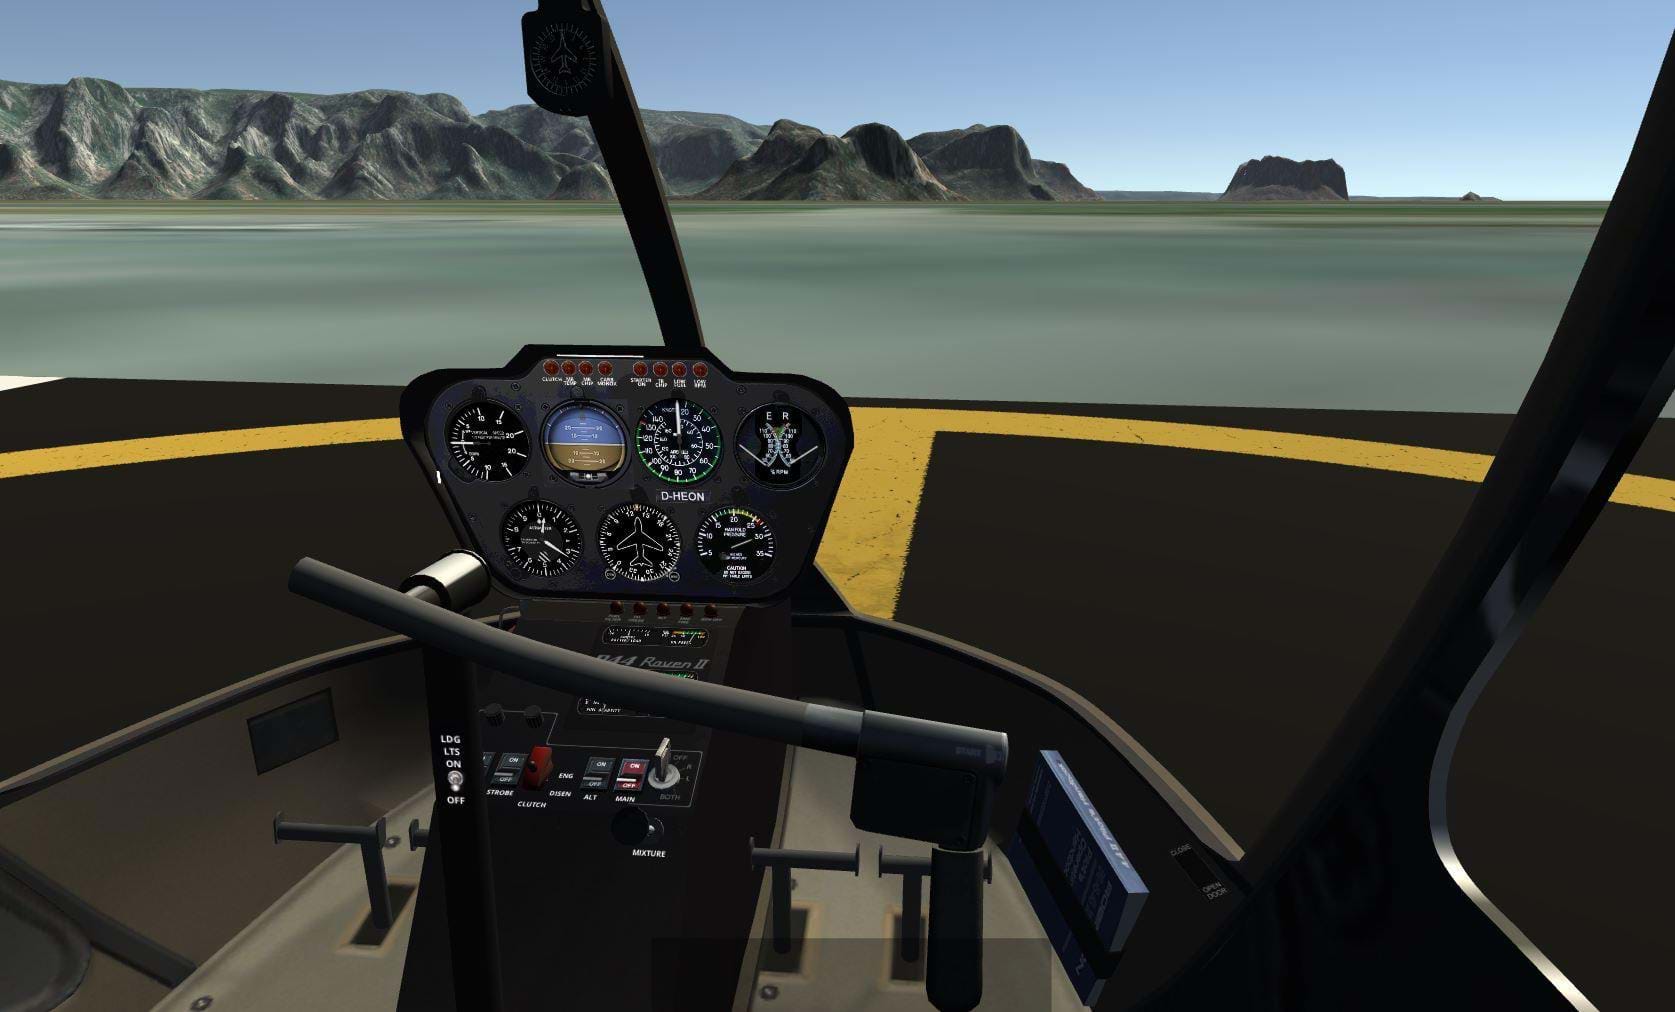 Airland - R22 cockpit